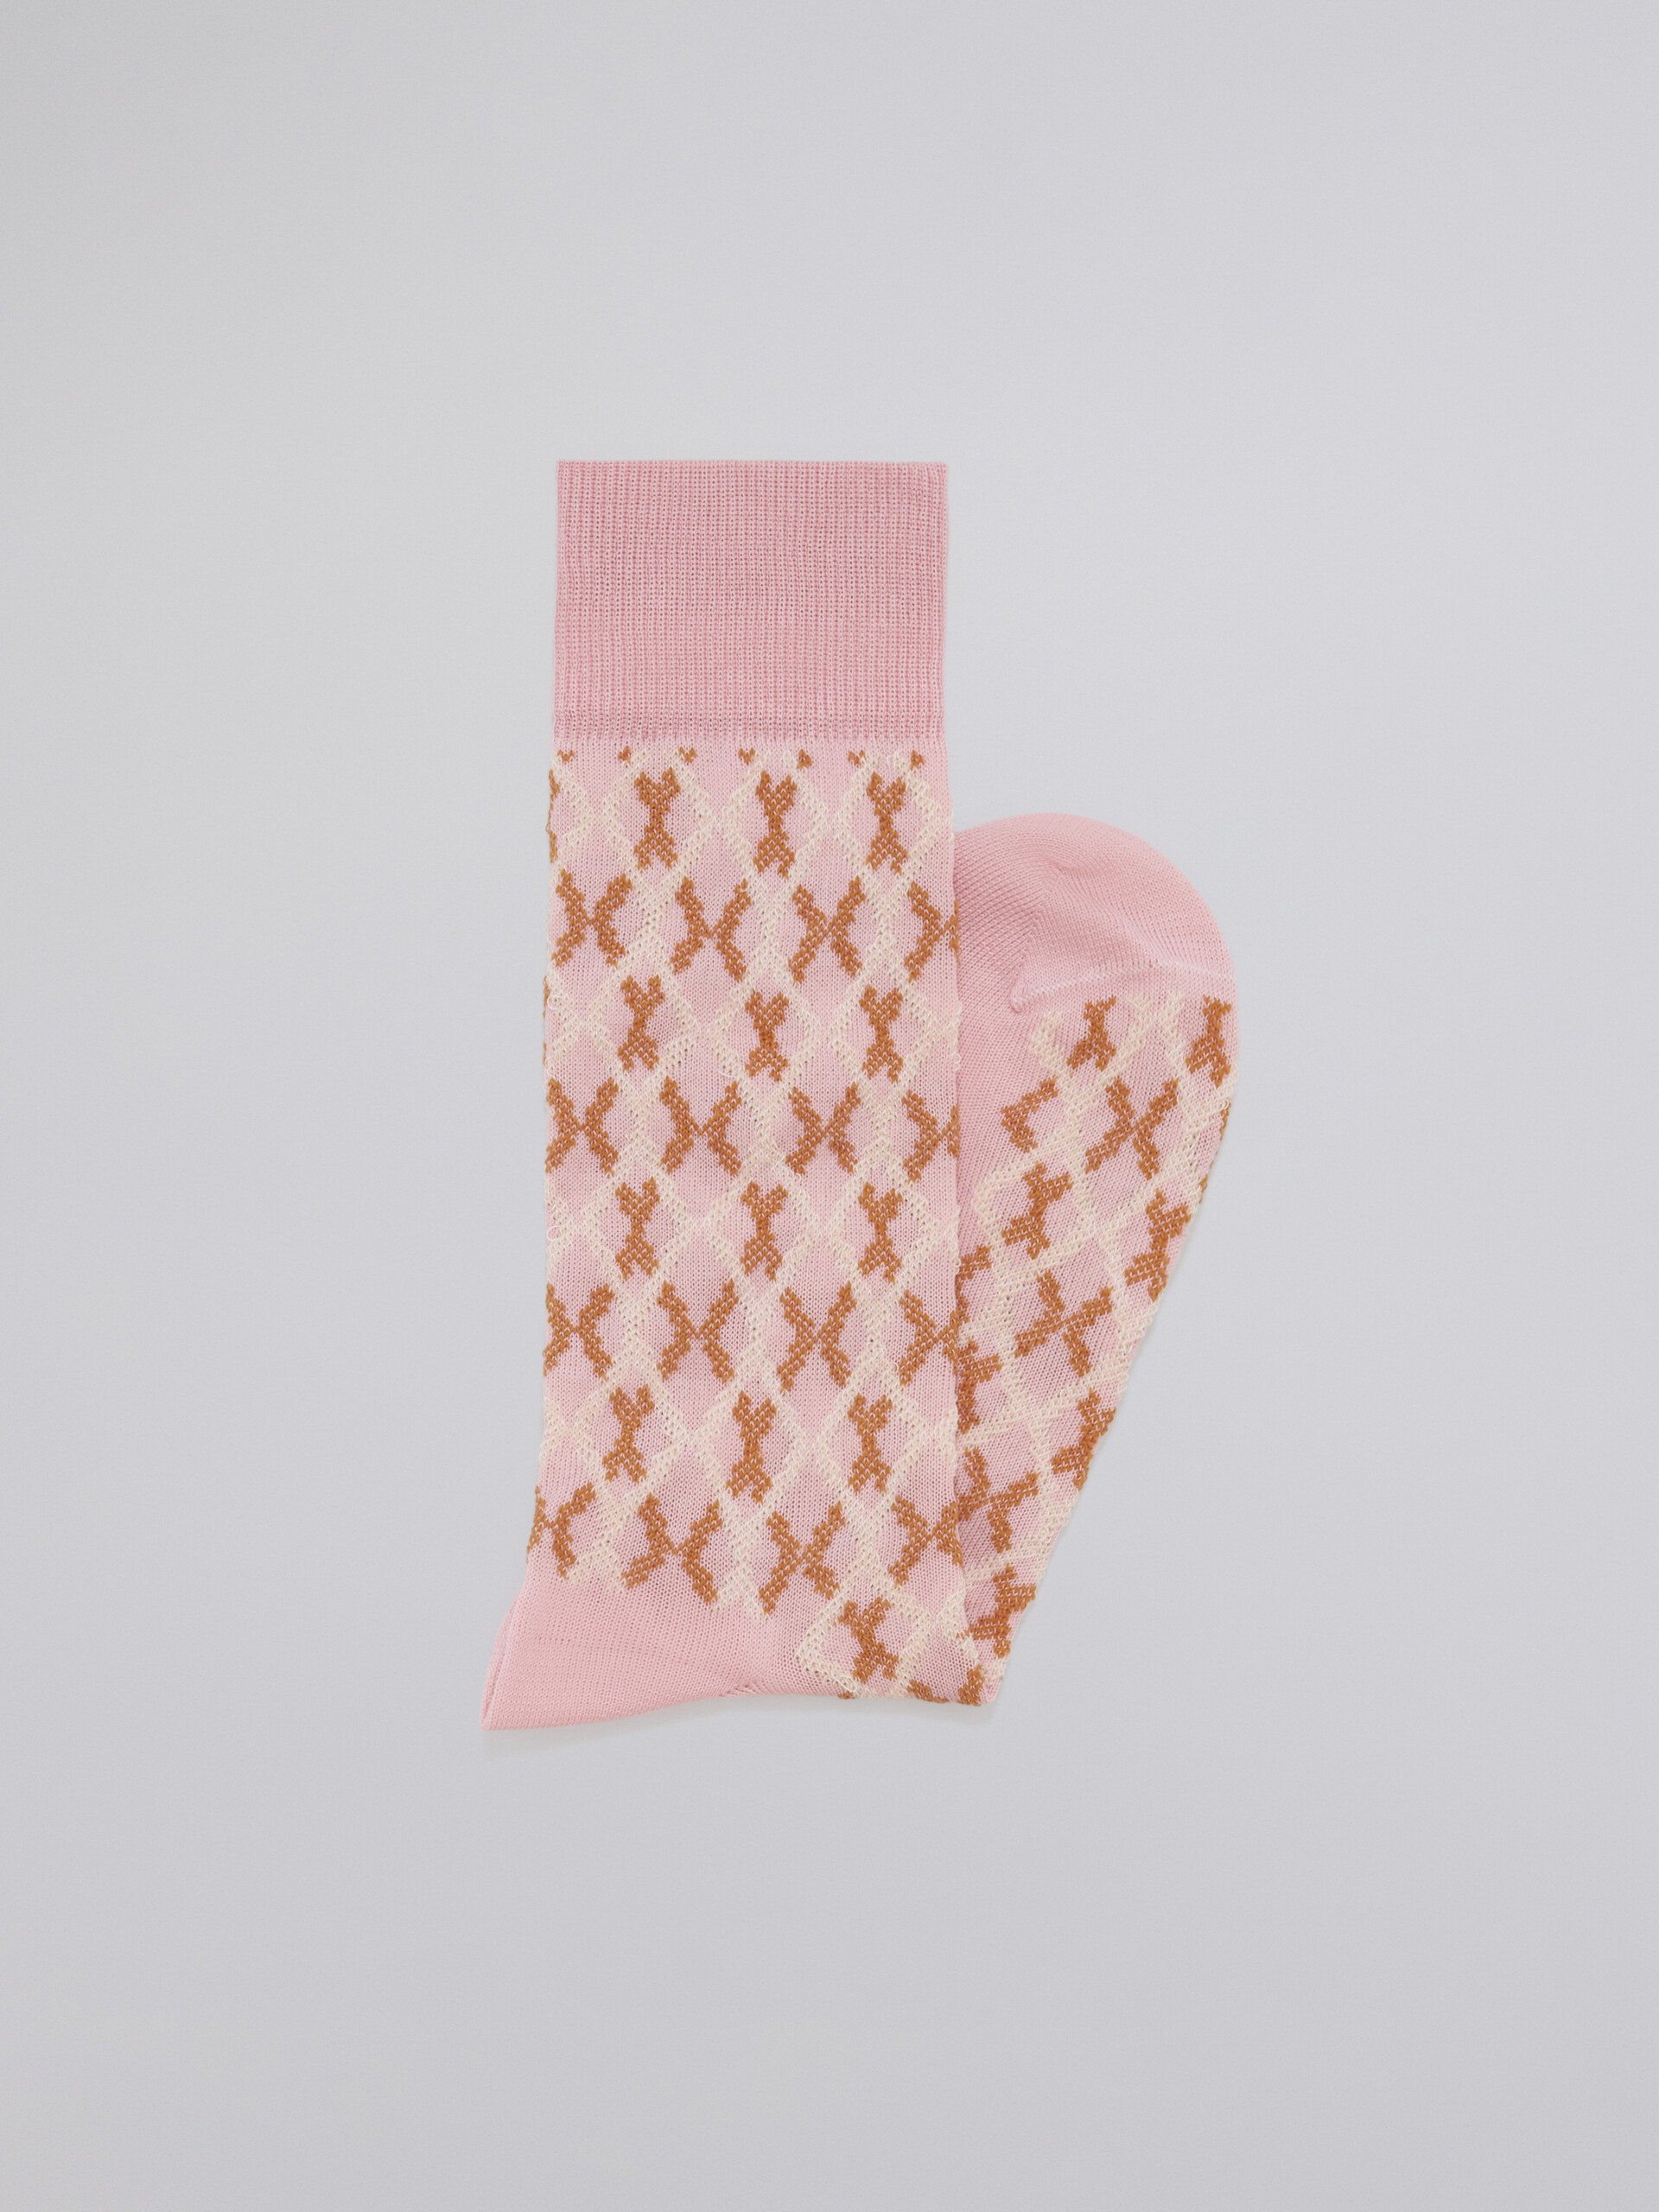 Rosafarbene Socke mit Mikro-Karojacquard aus Baumwolle und Nylon - Socken - Image 2